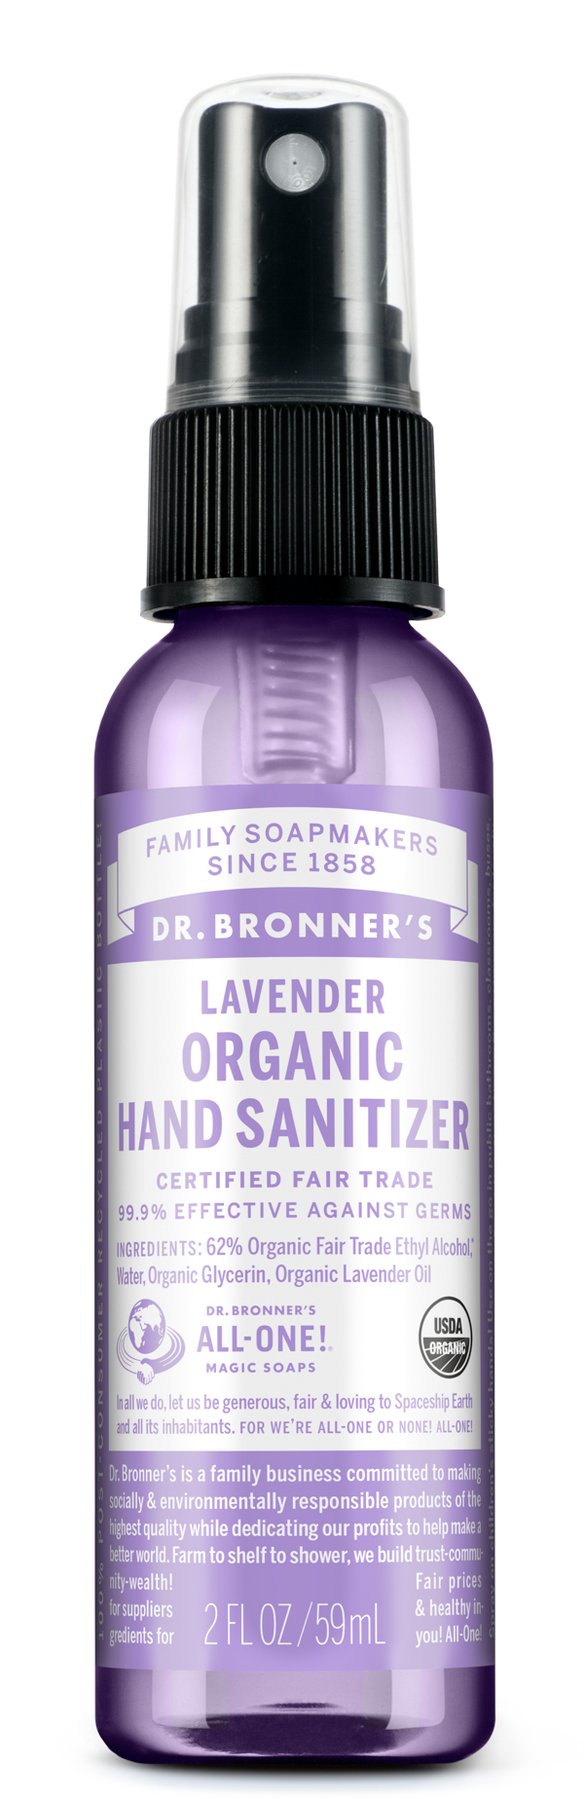 Lavender Organic Hand Sanitizer by Dr. Bronner's